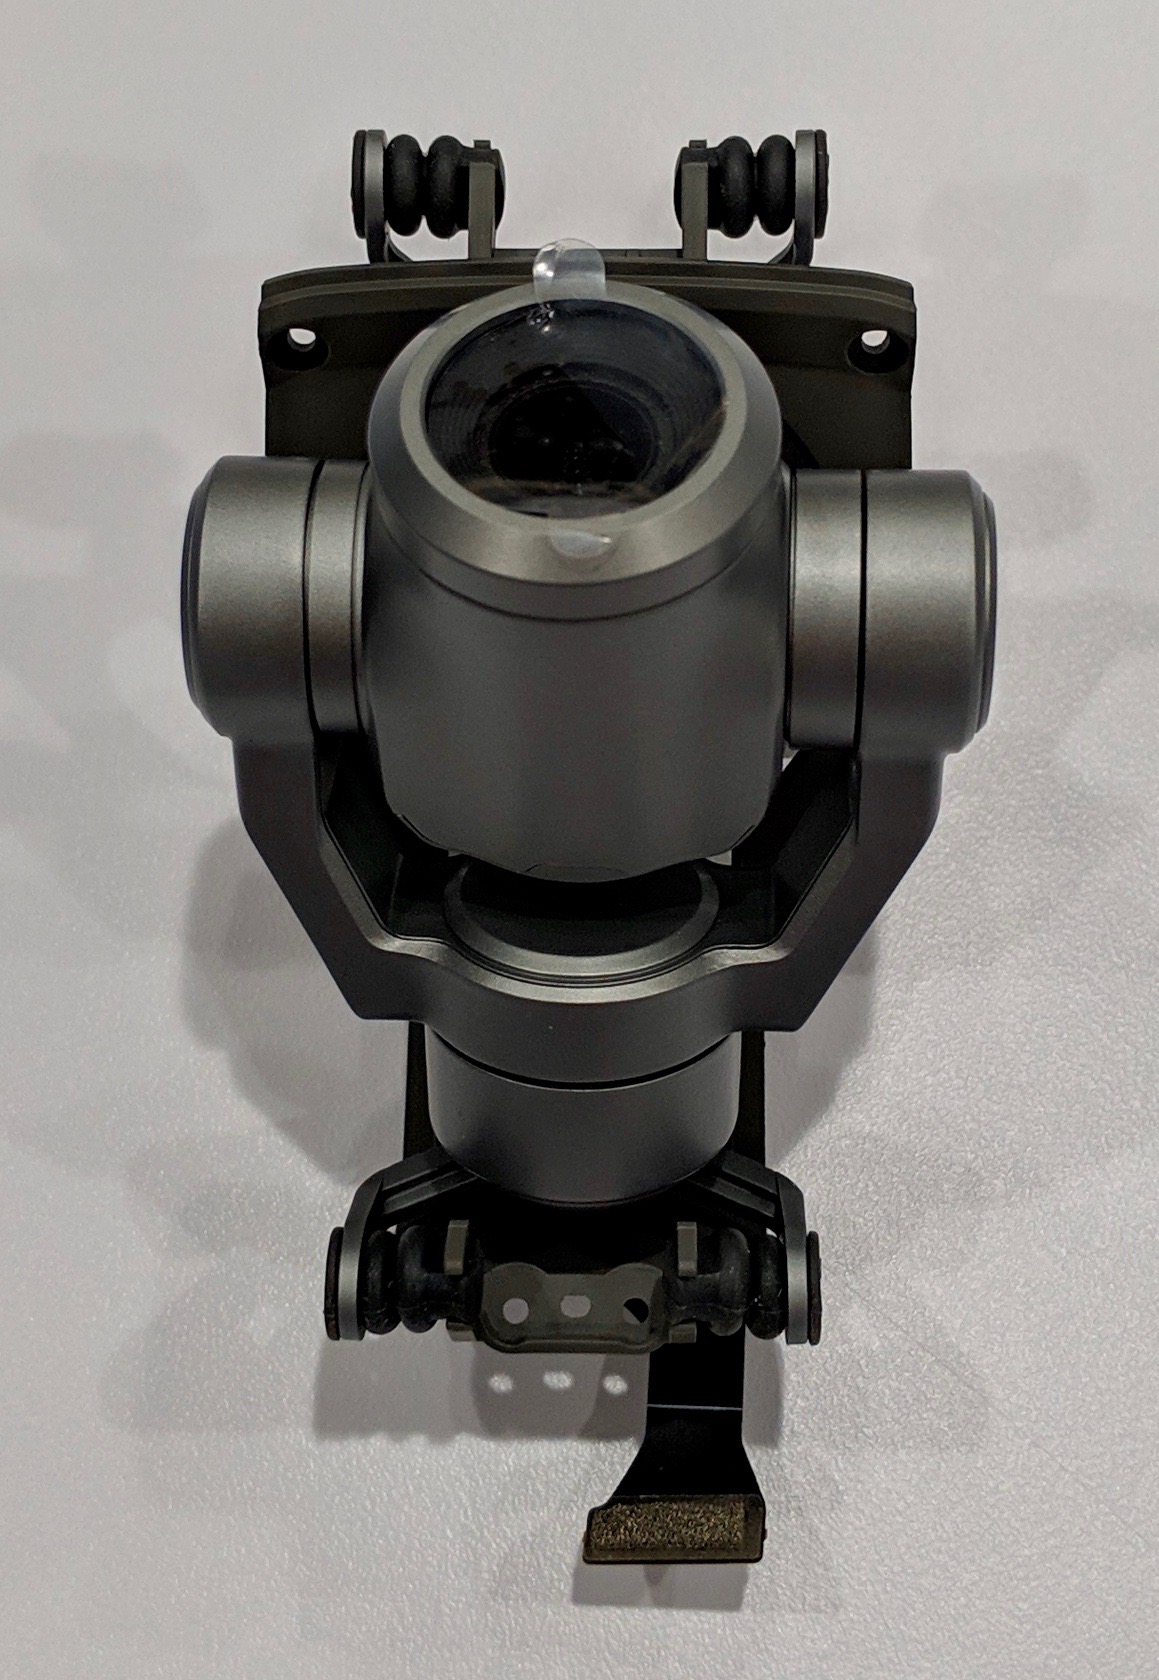 mavic-2-zoom-gimbal-and-camera-innovative-uas-drones